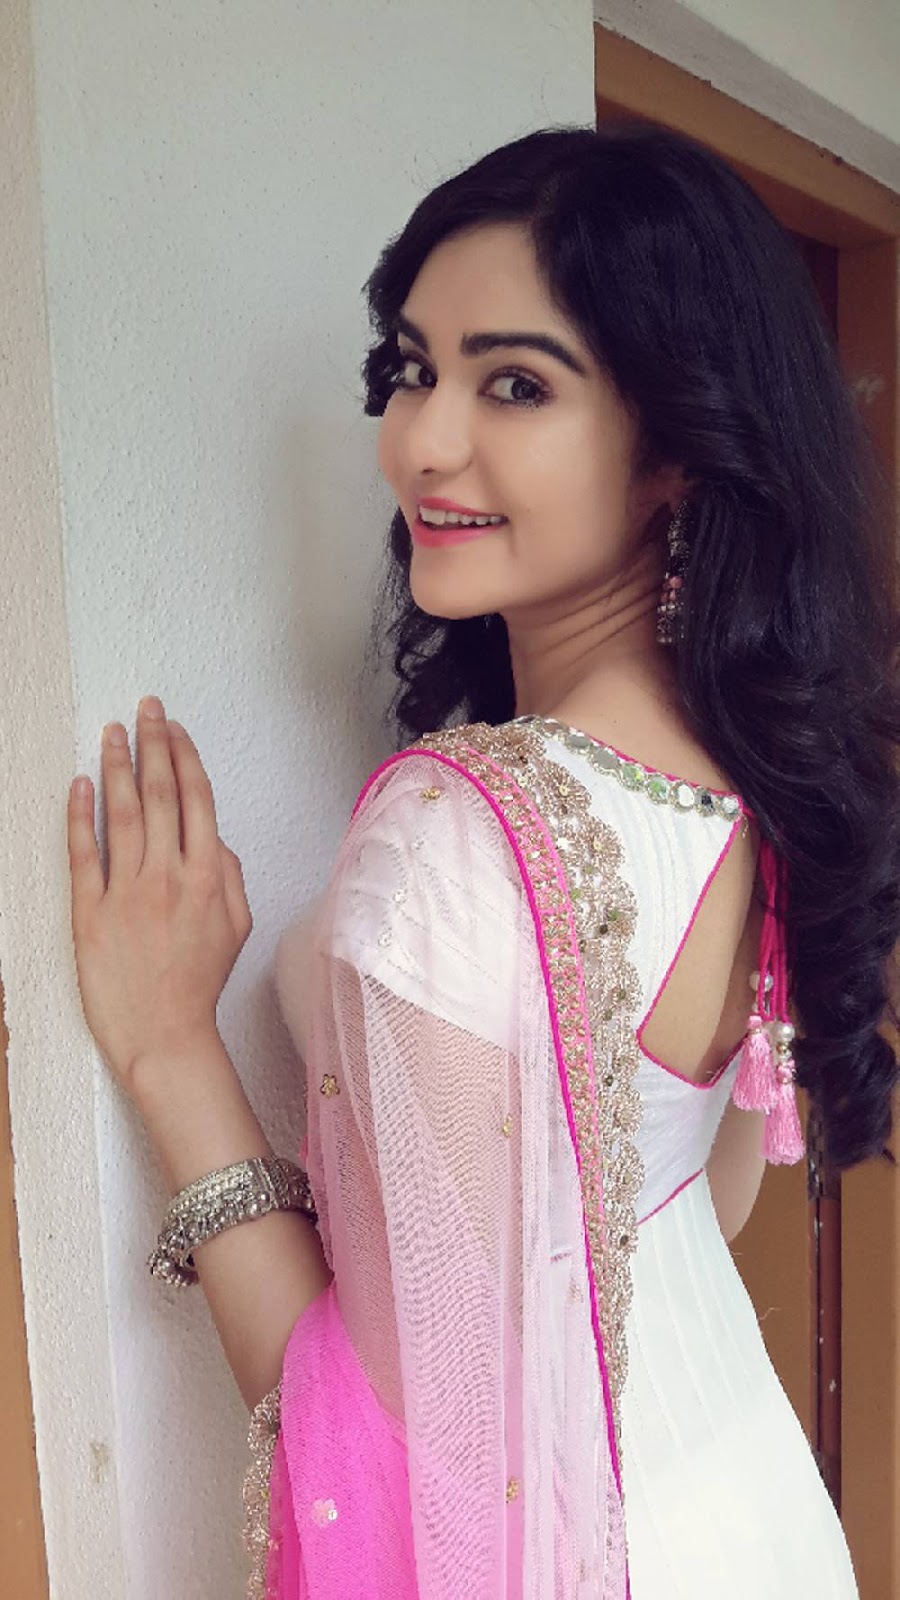 Adah Sharma Photoshoot Stills in White Dress | Indian Girls Villa - Celebs  Beauty, Fashion and Entertainment